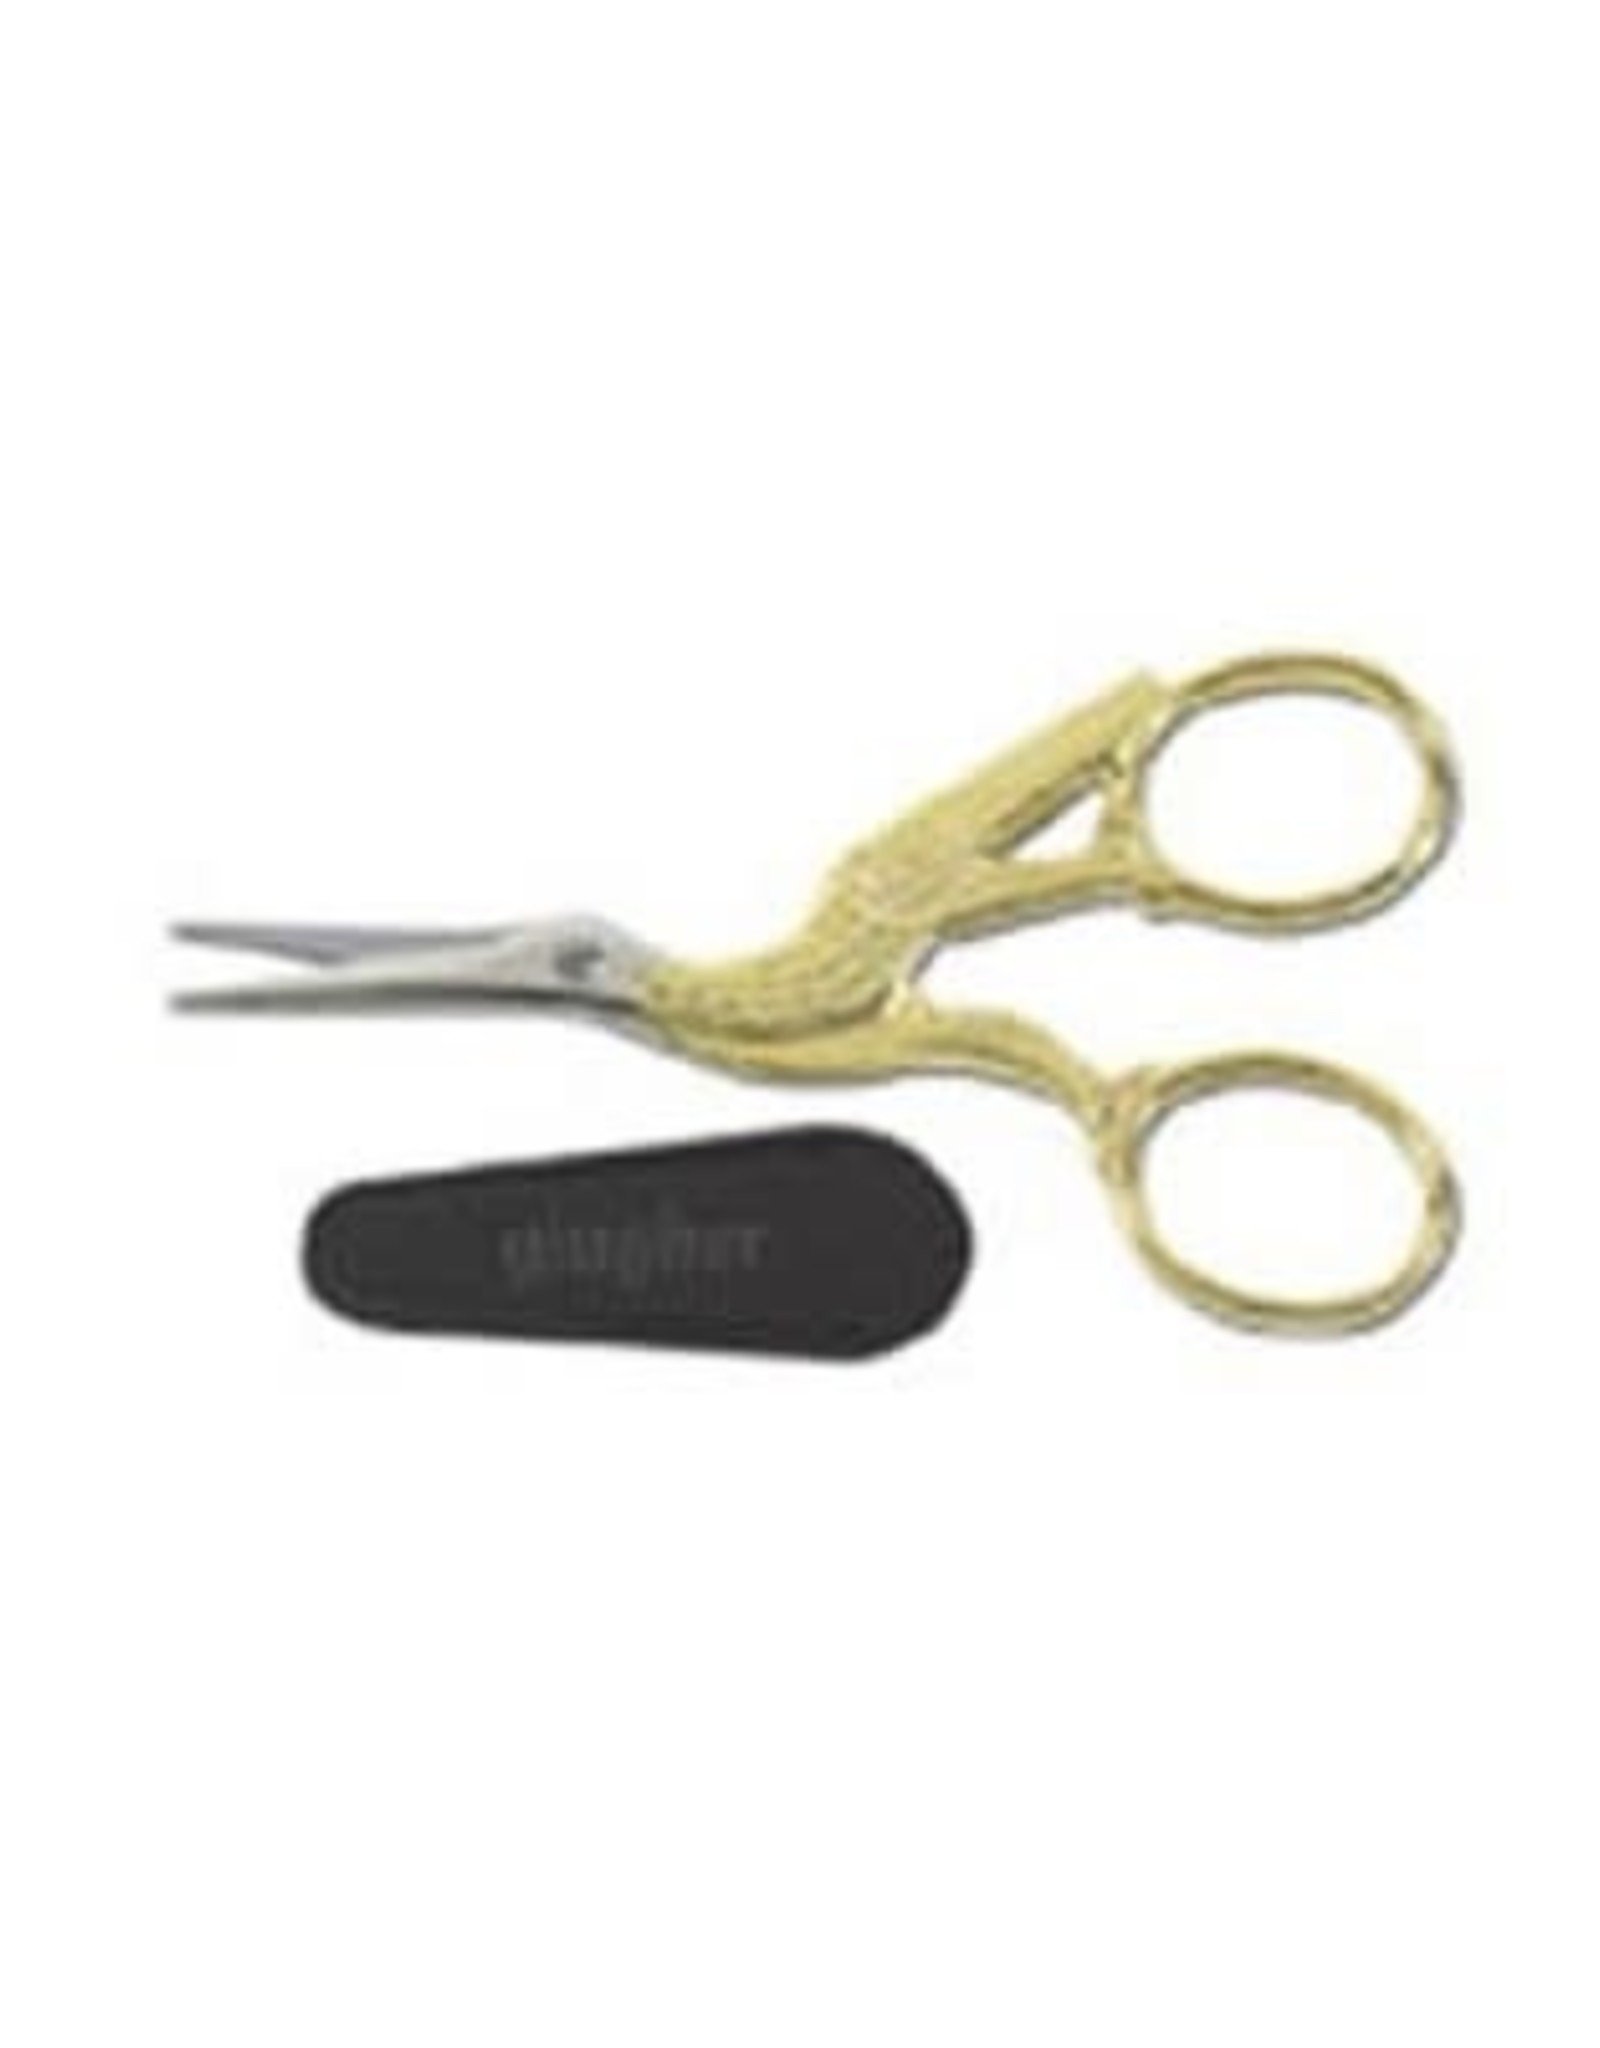 Gingher Gingher Stork Scissors Gold 3.5"